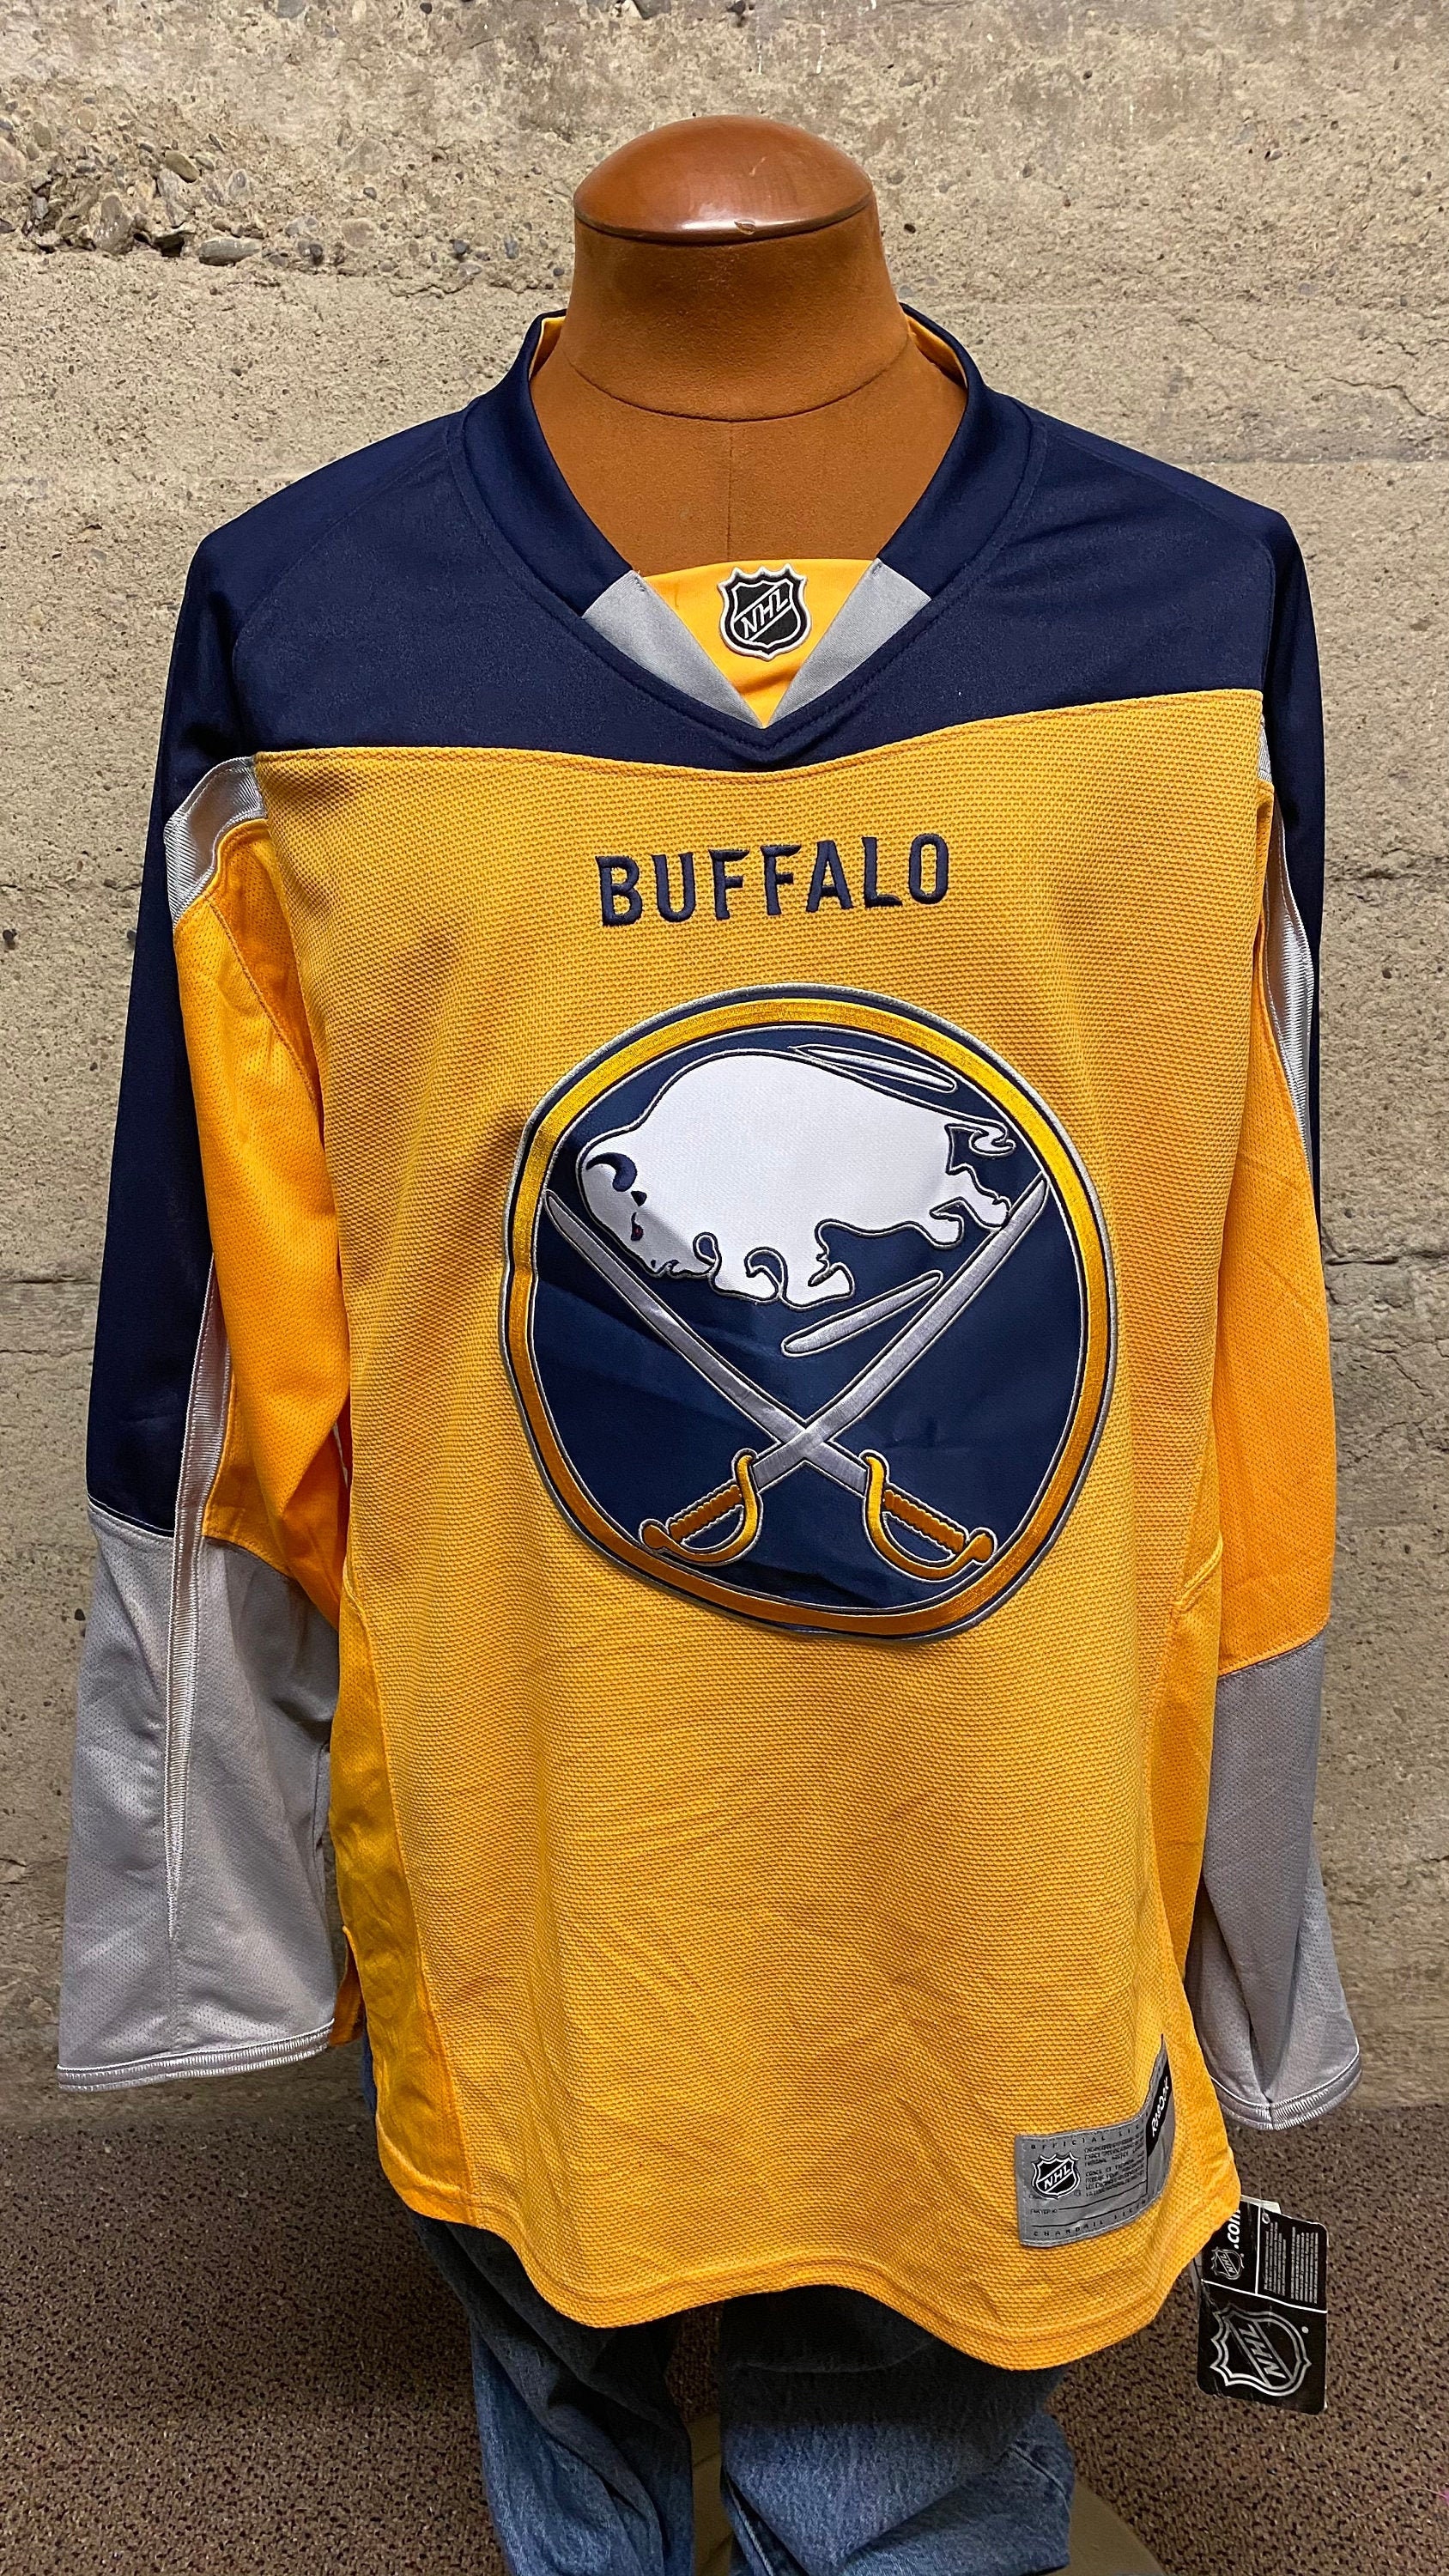 Jordan Santalucia on X: Buffalo Sabres 40th anniversary jersey